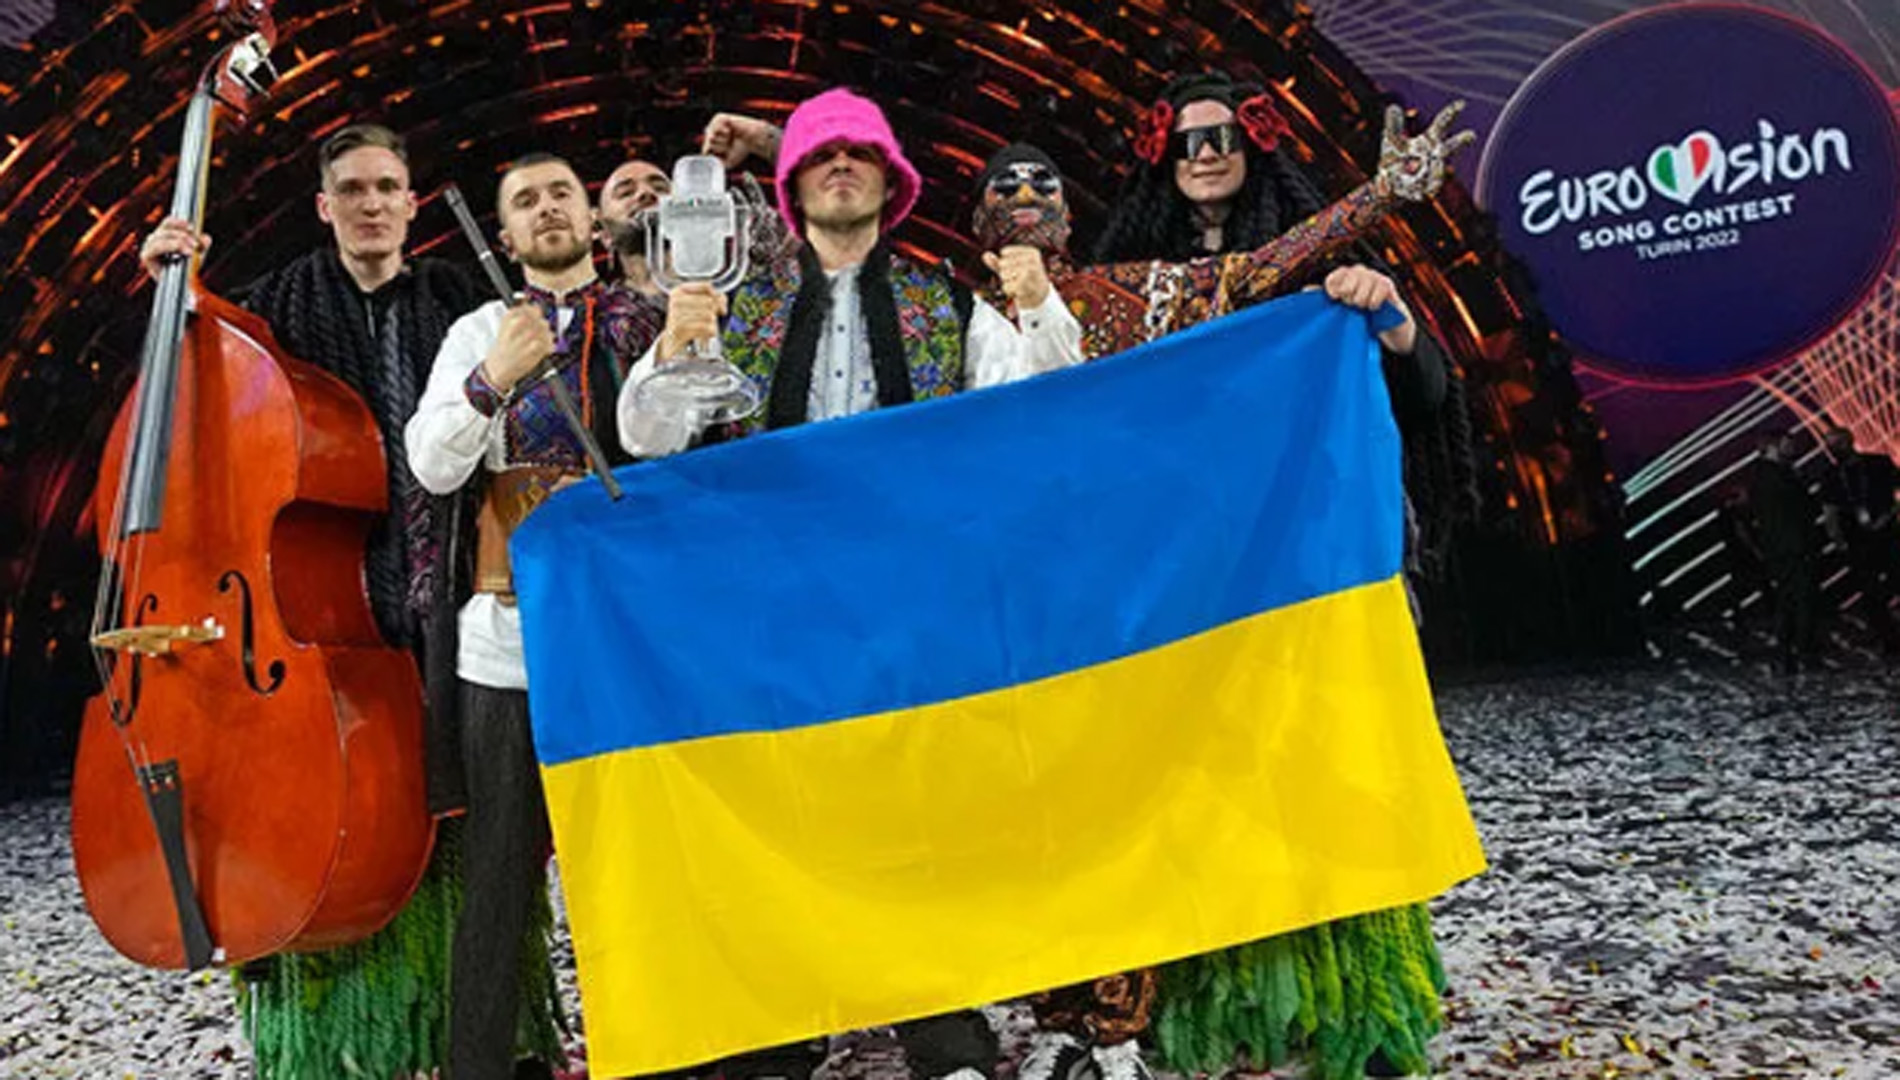 Rusya'yla savaşan Ukrayna, Euorovision 2022 kazananı oldu! Kalush Orchestra 'Stefania' ile geceye damga vurdu! 